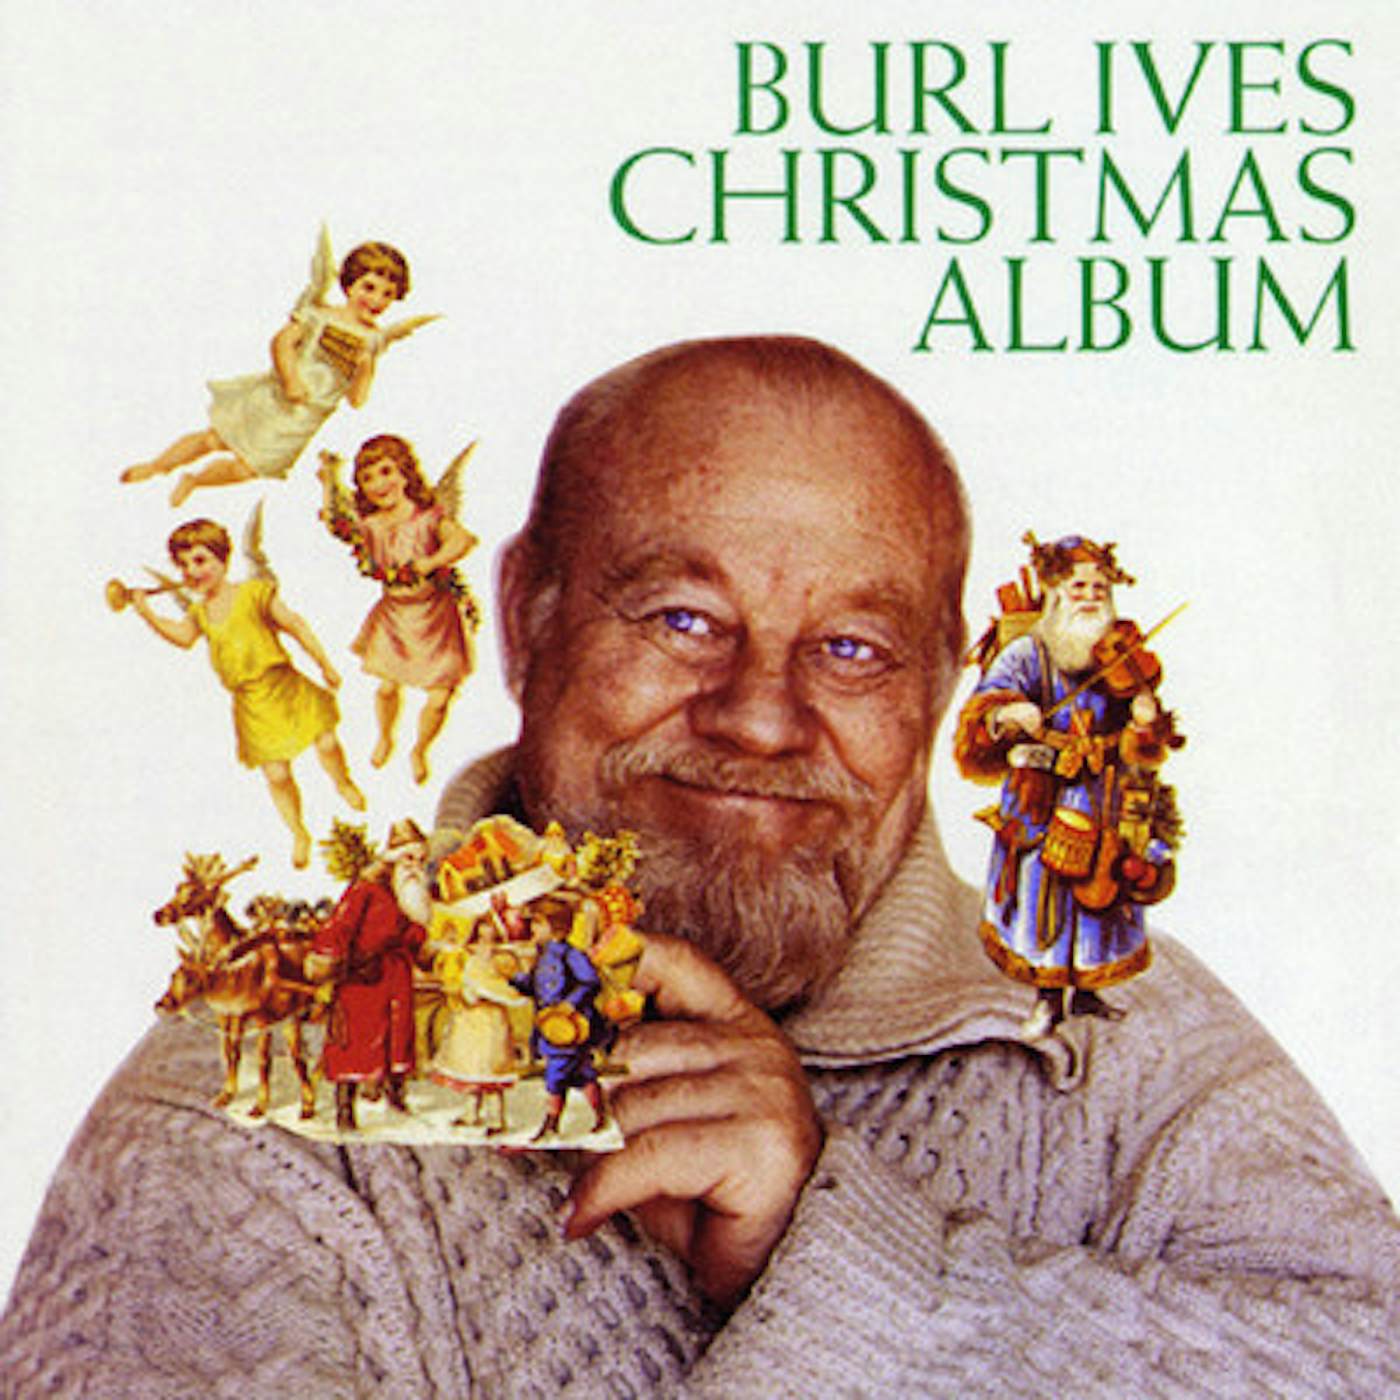 Burl Ives CHRISTMAS ALBUM CD